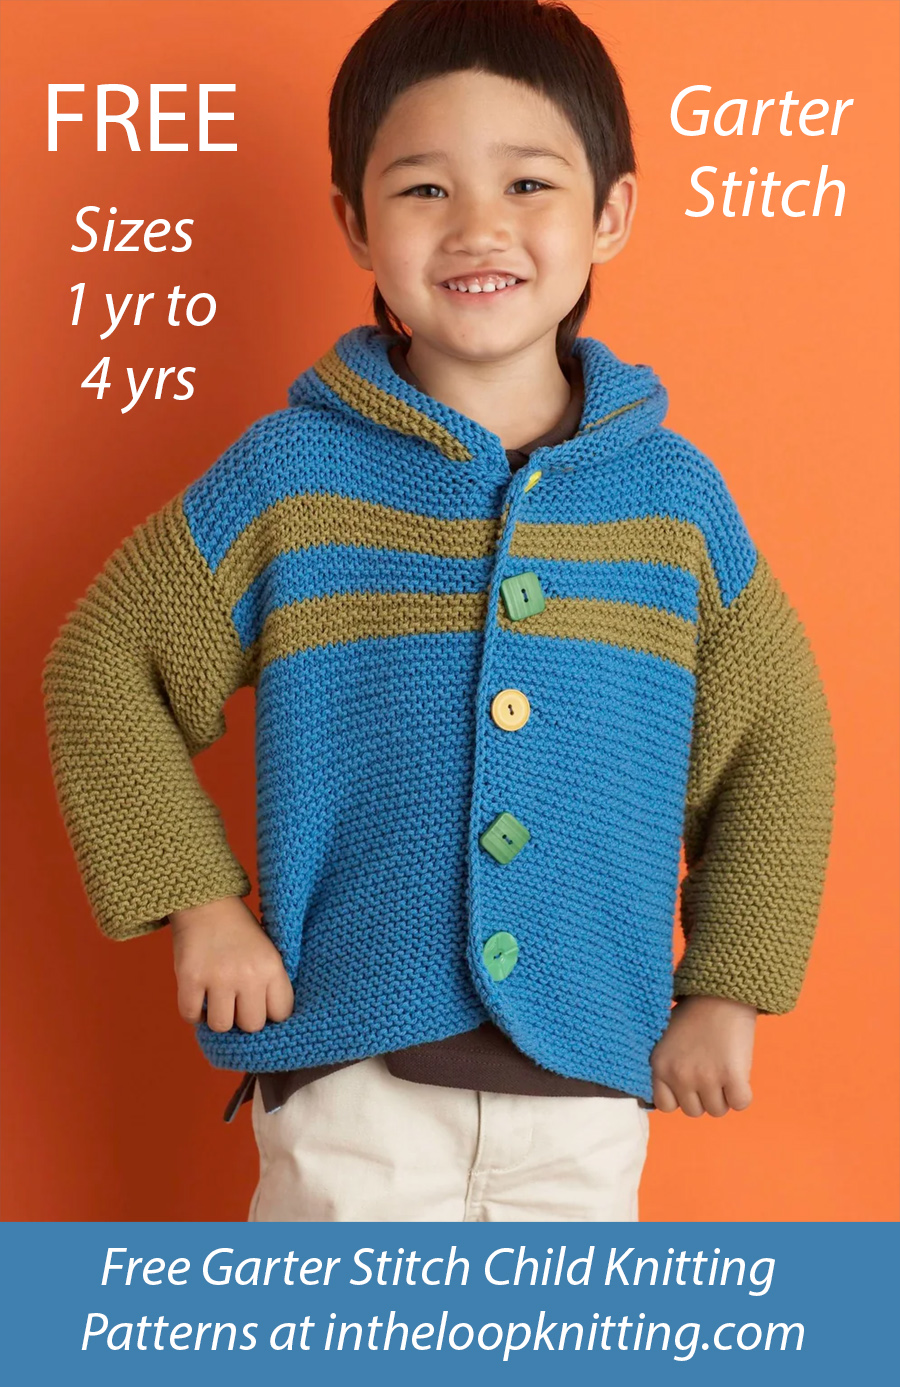 Free Baby and Child Patrick's First Jacket Knitting Pattern Garter Stitch